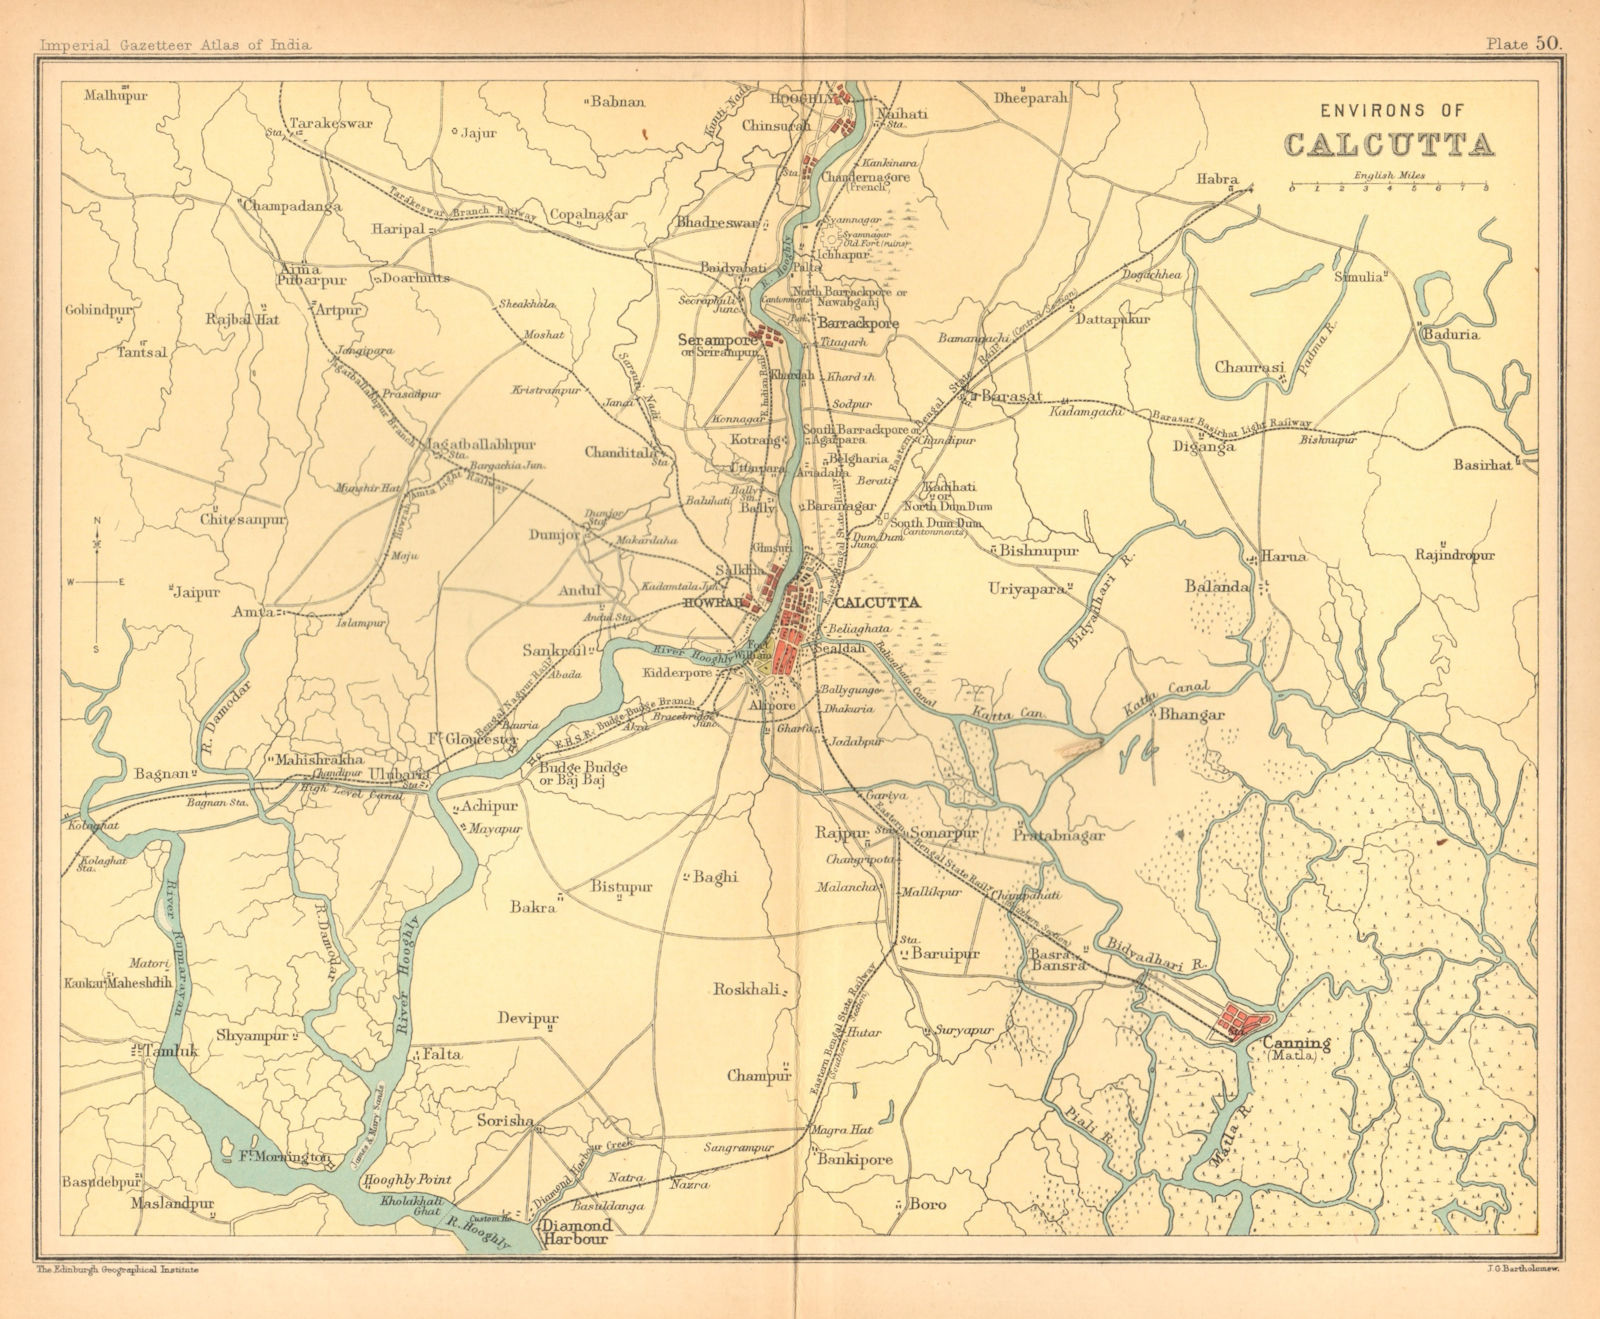 Calcutta/Kolkata environs Hooghly Canning Diamond Harbour British India 1909 map